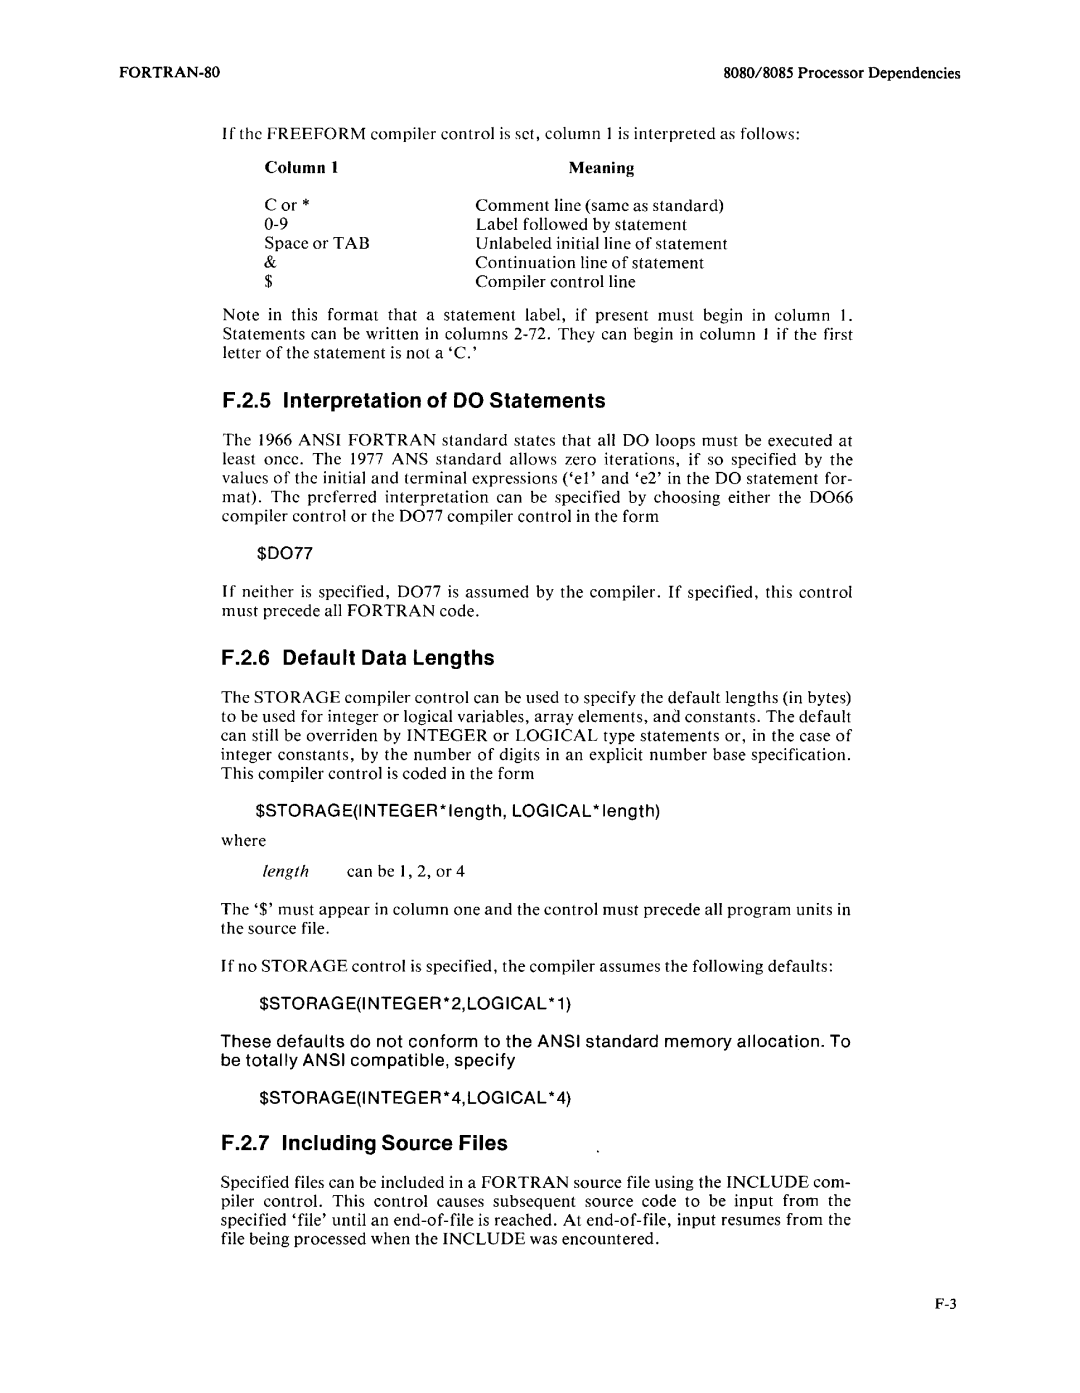 Intel fortran-80 F.2.5 Interpretation of DO Statements, F.2.6 Default Data Lengths, F.2.7 Including Source Files, $0077 